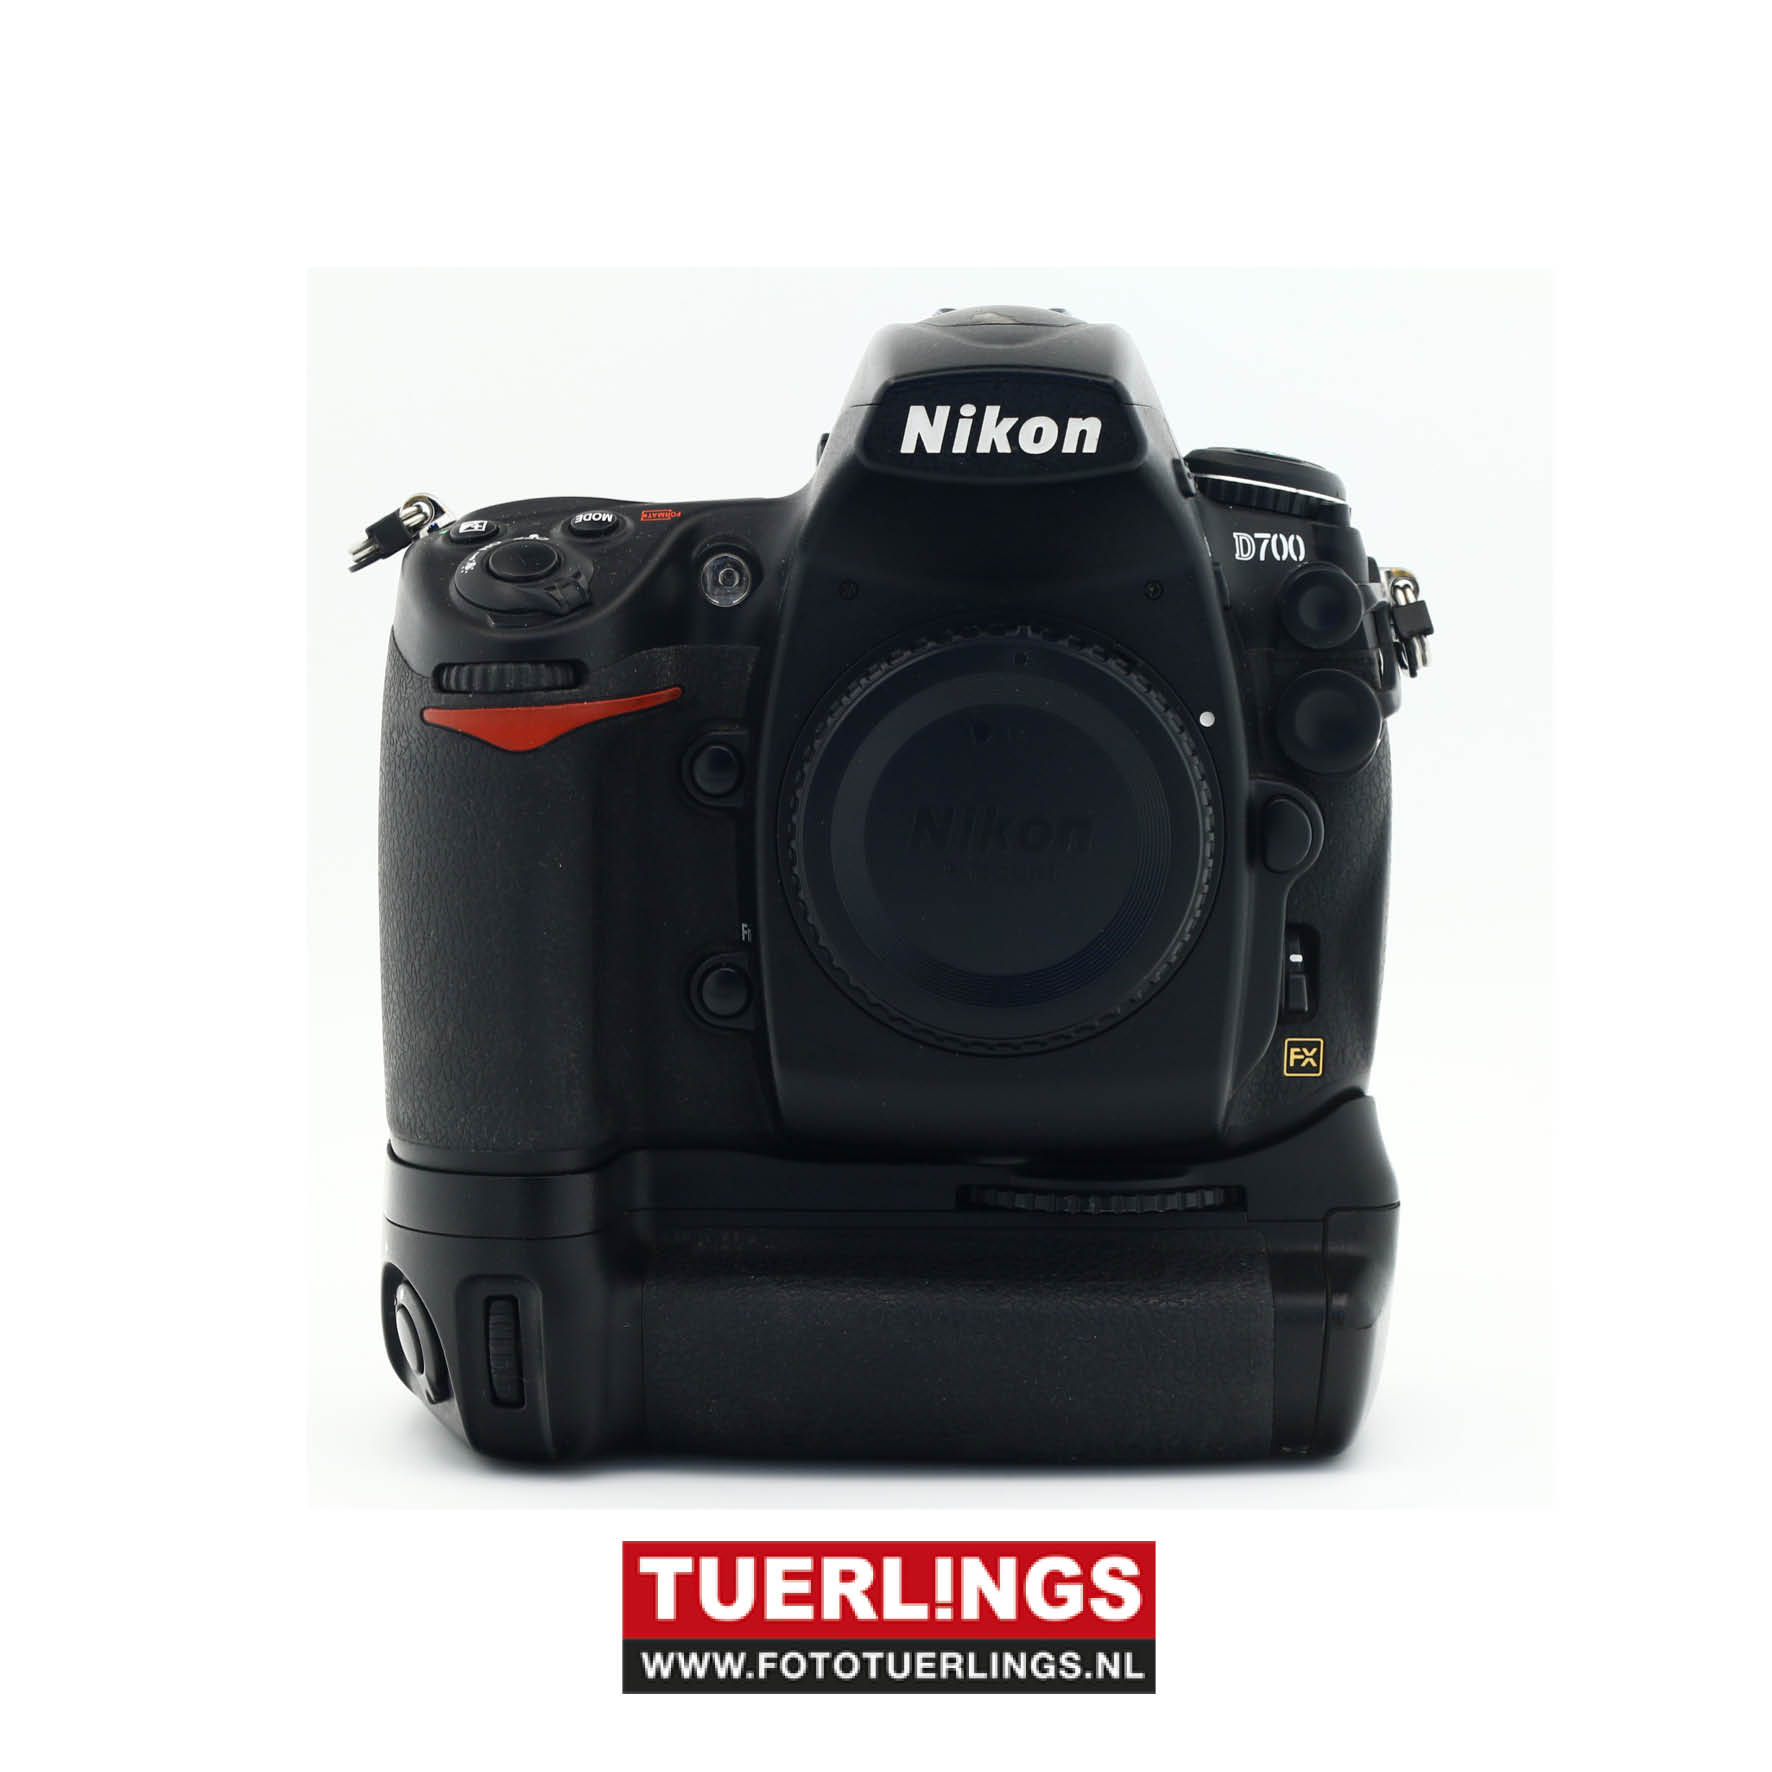 Correctie Overlappen gesponsord Nikon D700 Digitale Spiegelreflex Camera Full-frame + MB-D10 Grip occasion  - Foto Tuerlings